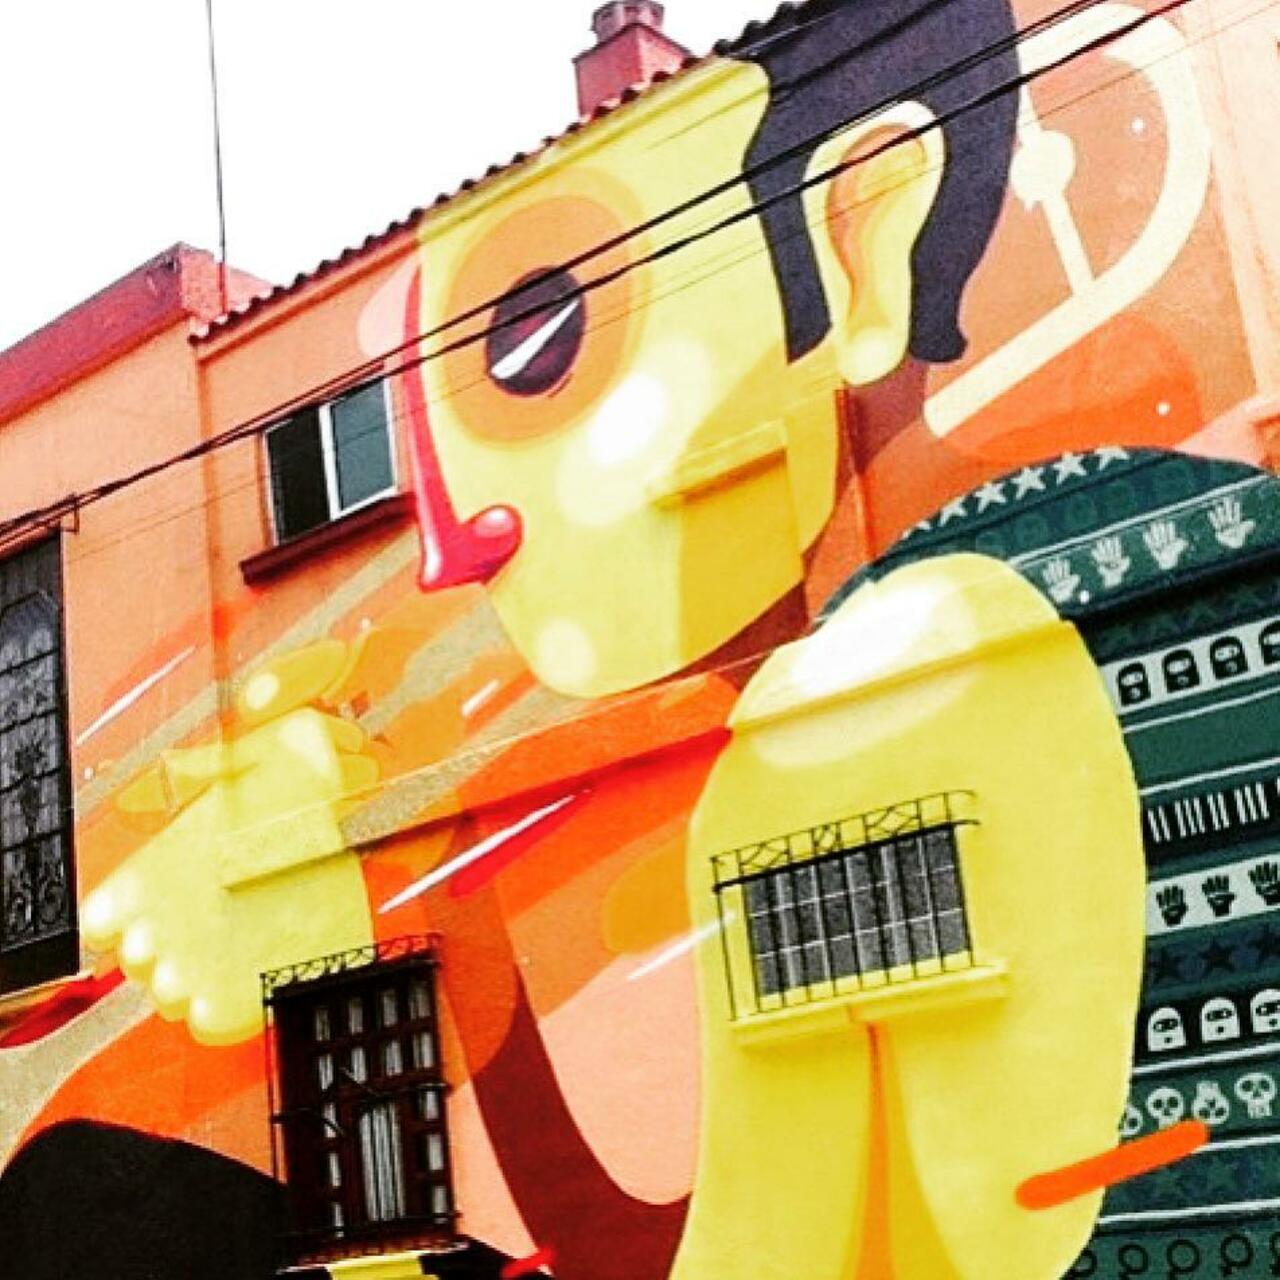 #mural #murales #urbanart #graffiti #streetart #art http://t.co/letbGESqC9